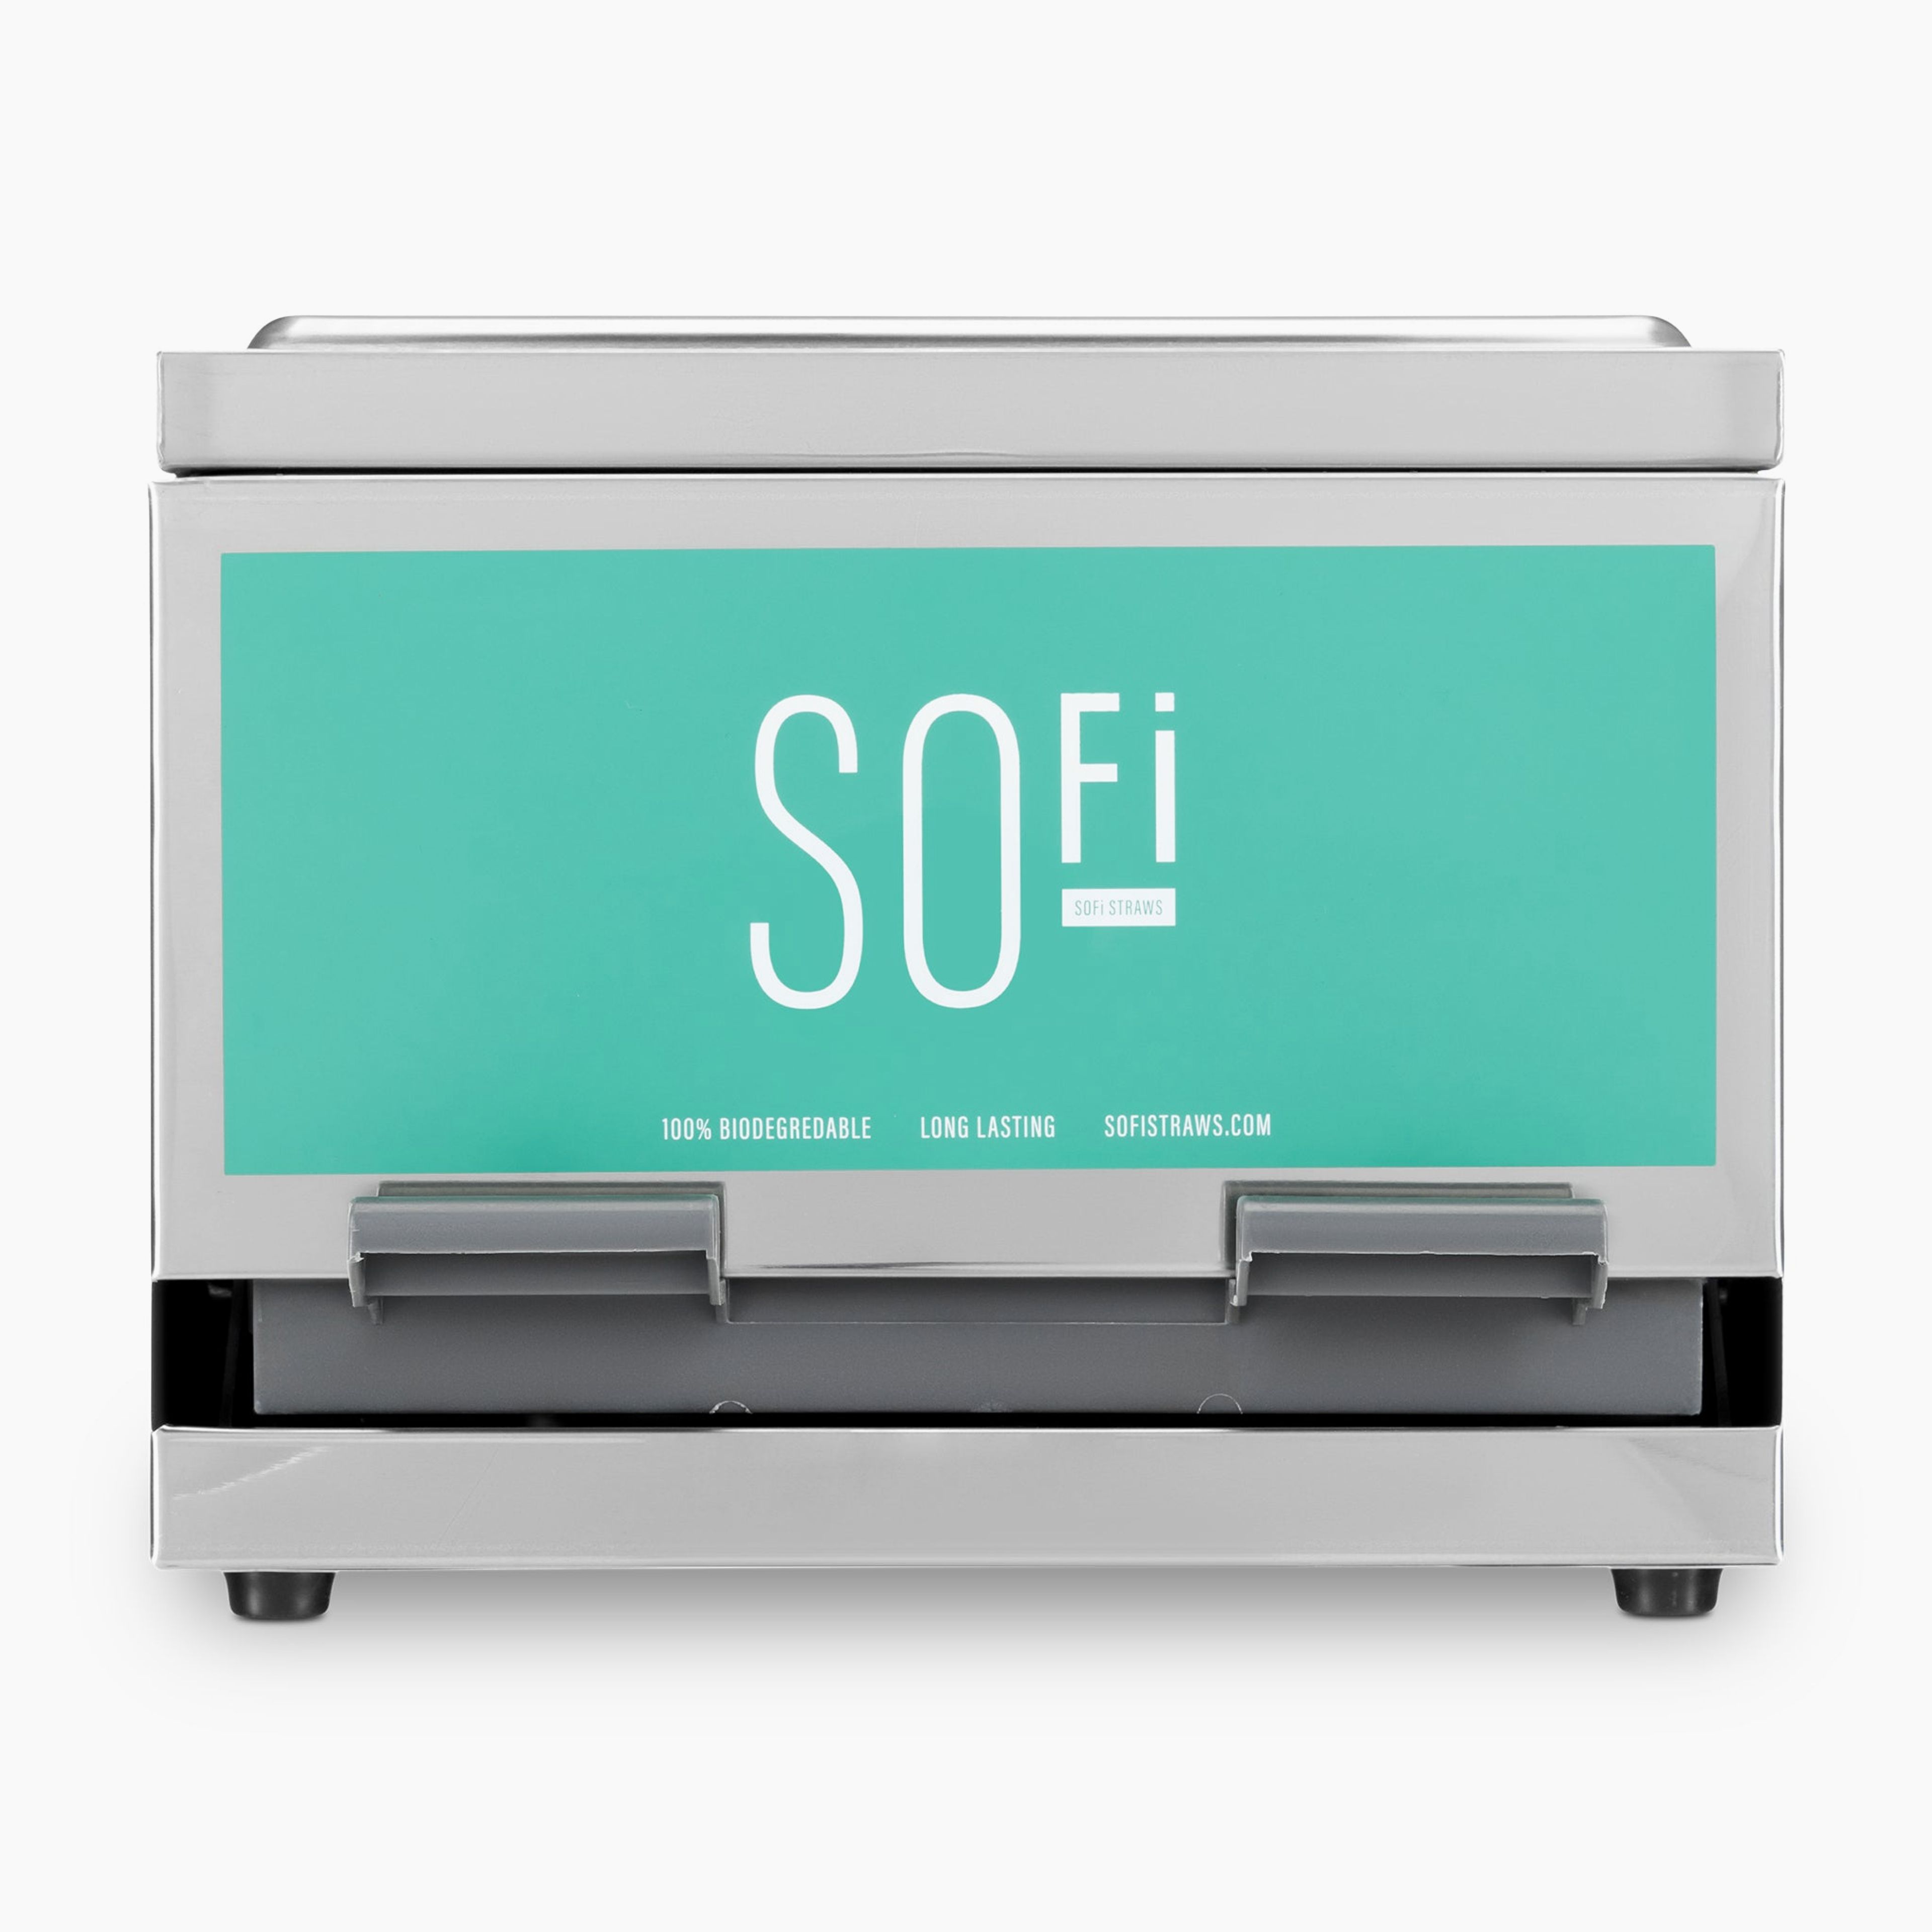 SOFi Dispenser